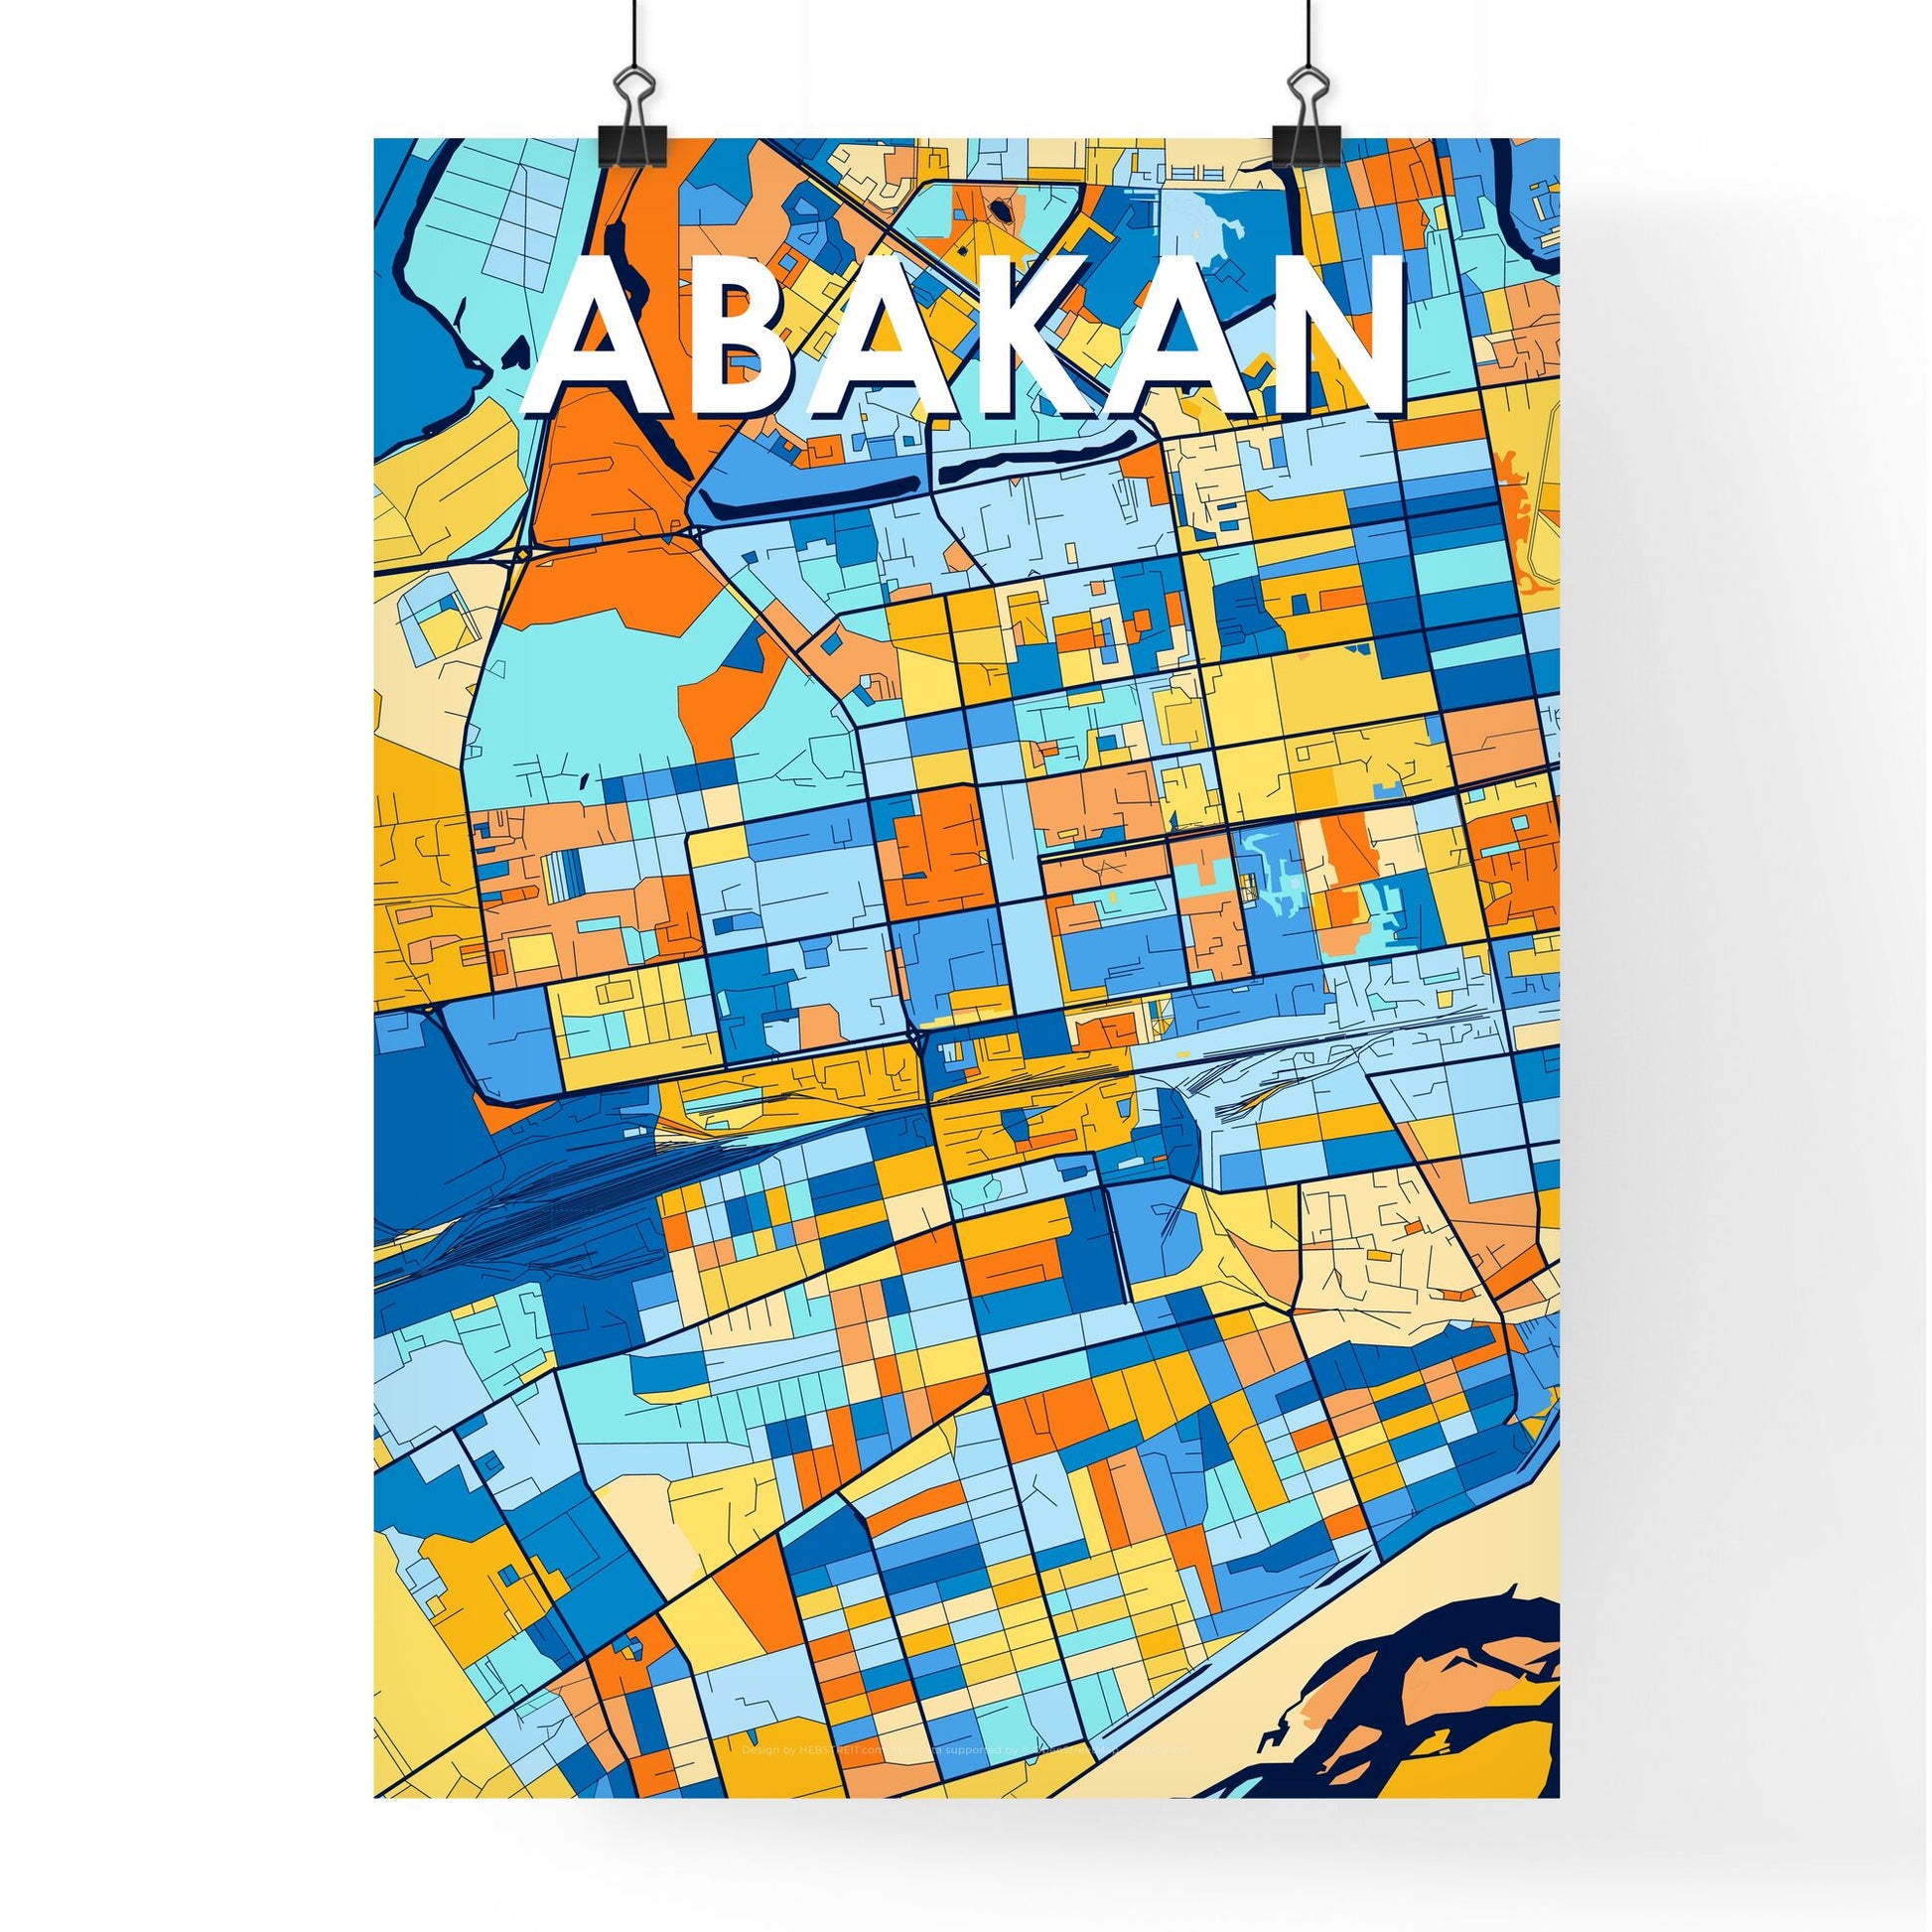 ABAKAN RUSSIA Vibrant Colorful Art Map Poster Blue Orange